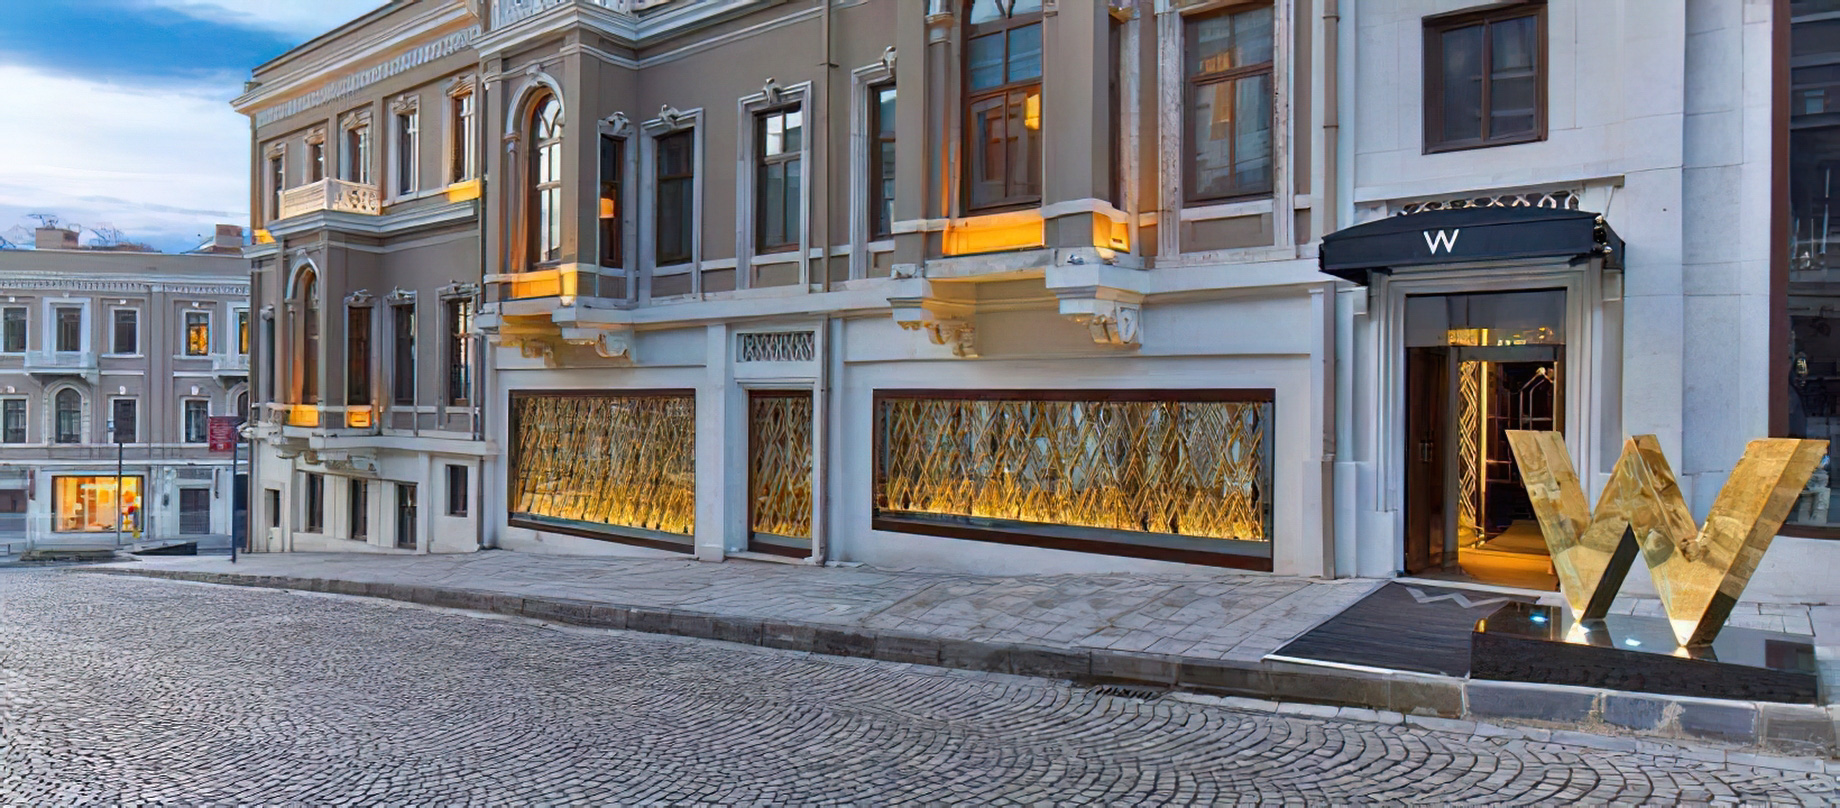 W Istanbul Hotel – Istanbul, Turkey – Exterior Street Entrance